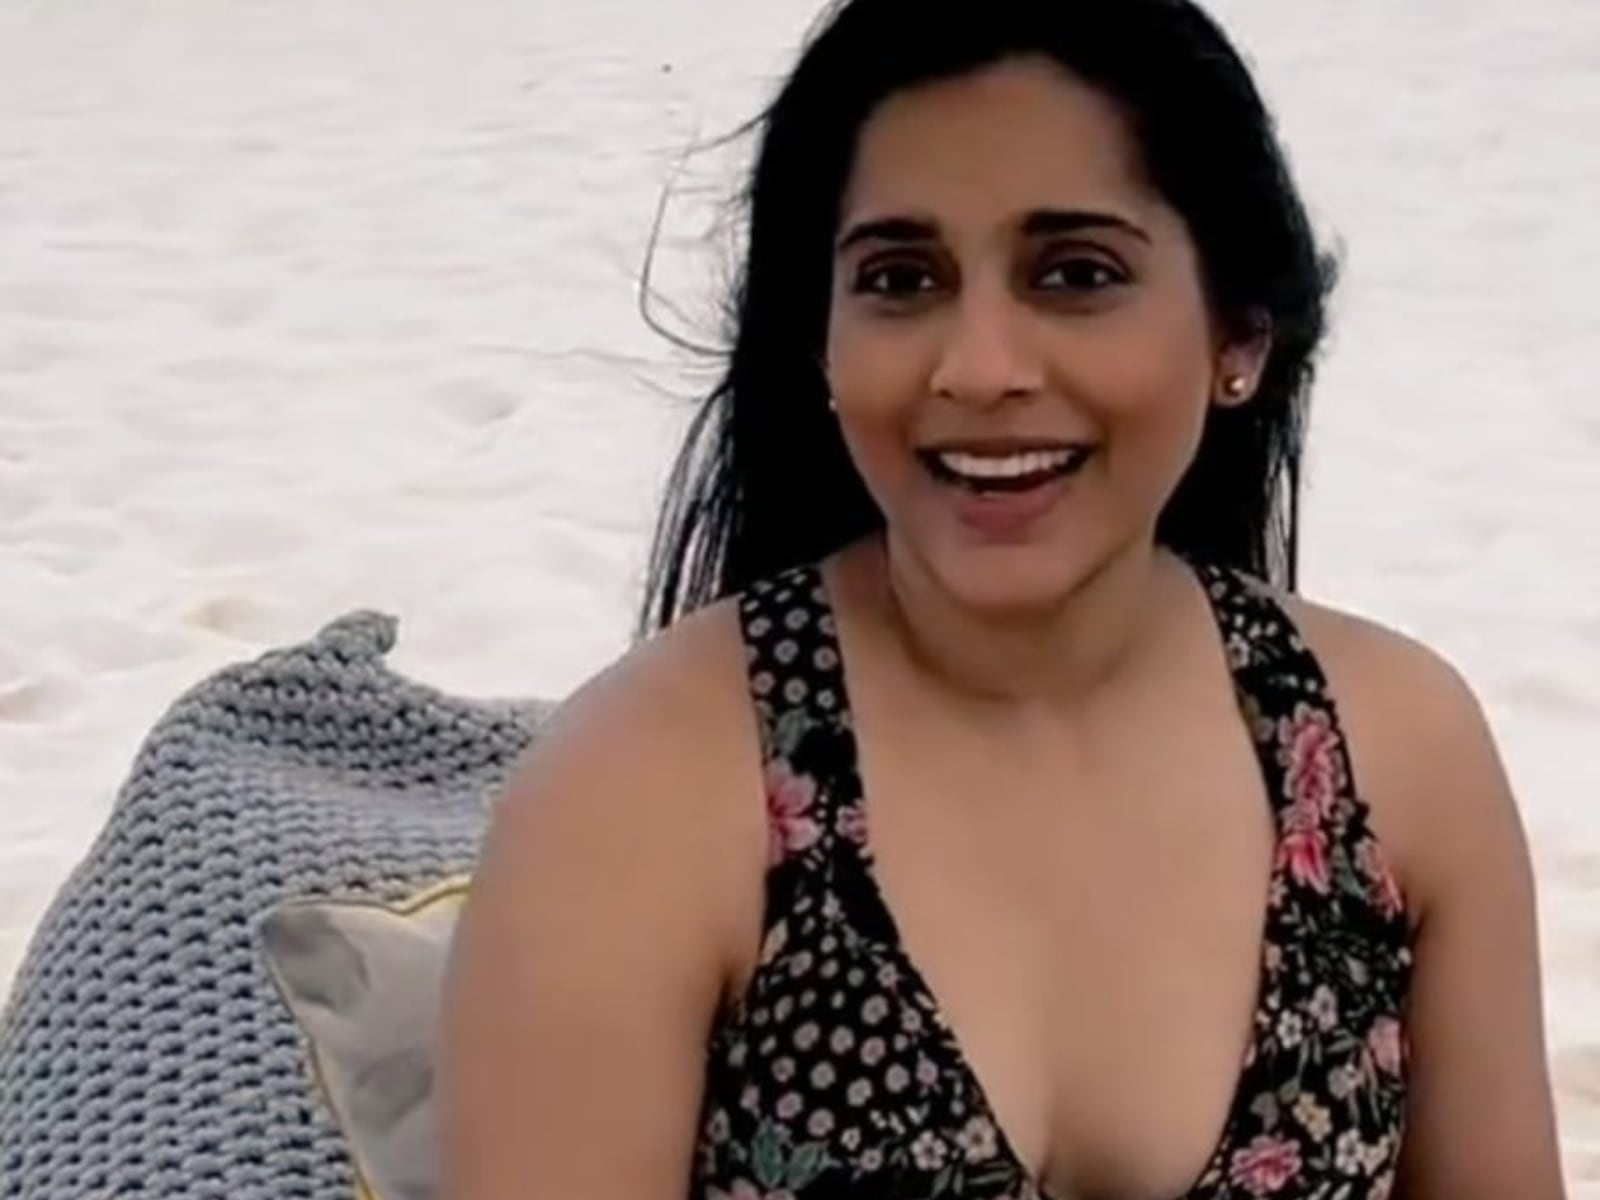 Rashmi Sex - Actress Rashmi Gautam's Dreamy Maldives Vacation Pics Give Us Travel Goals  - News18